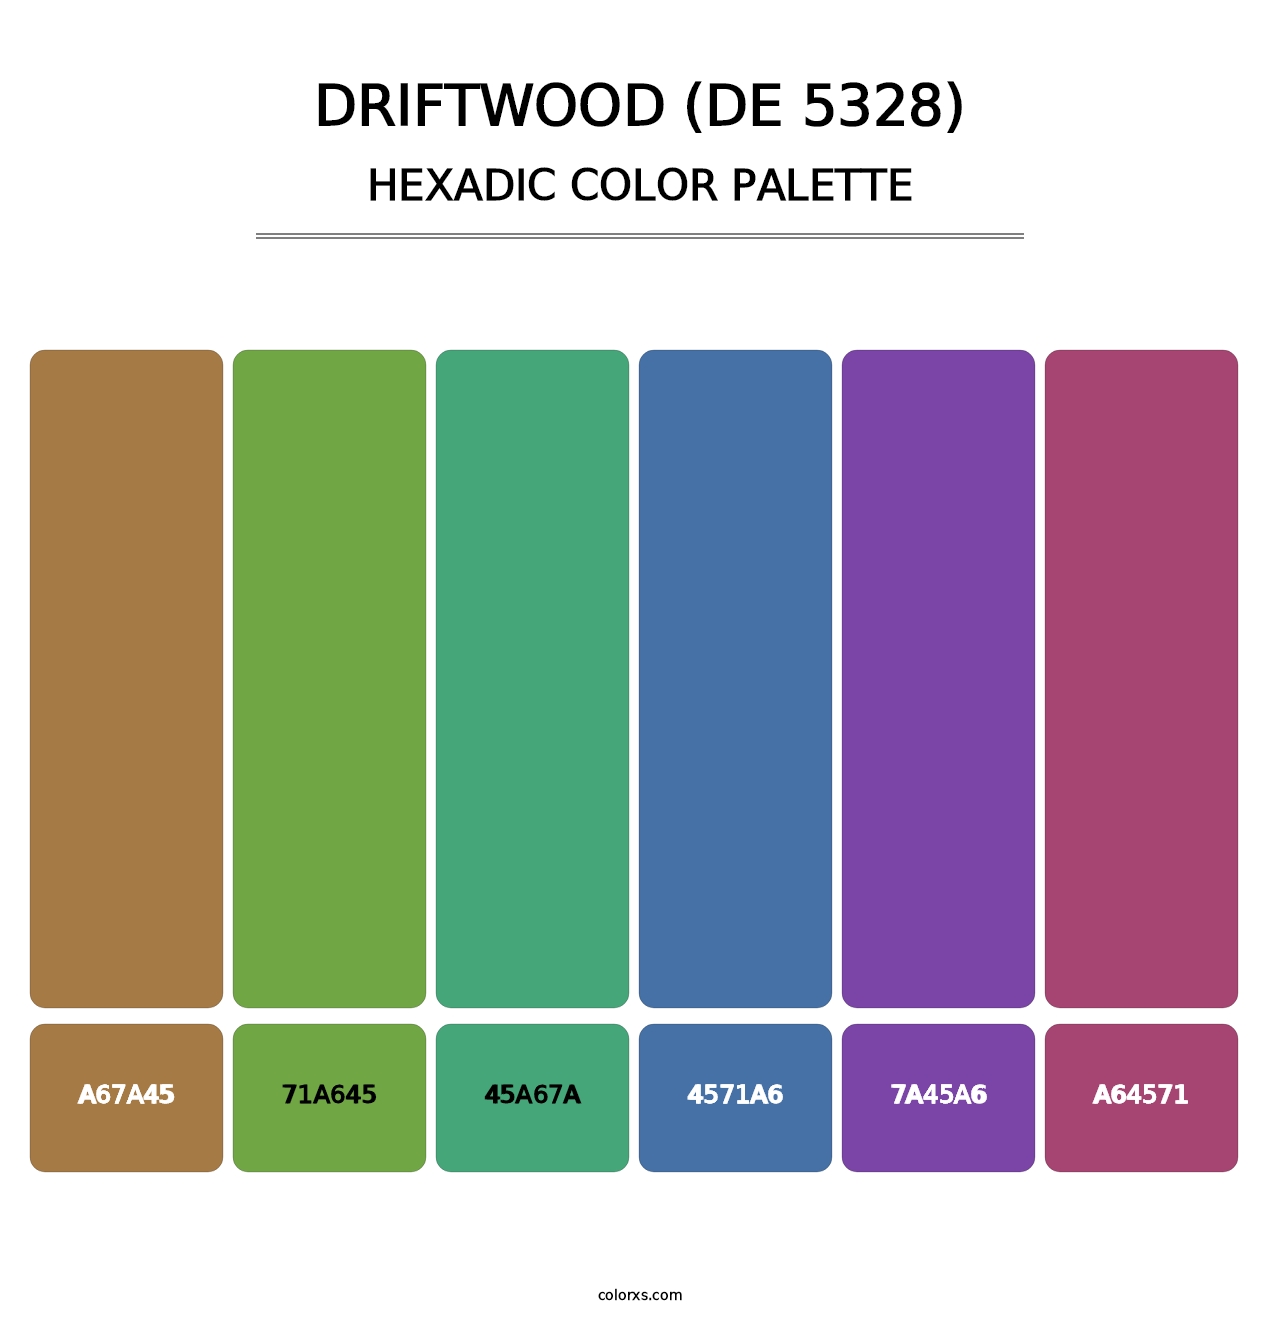 Driftwood (DE 5328) - Hexadic Color Palette